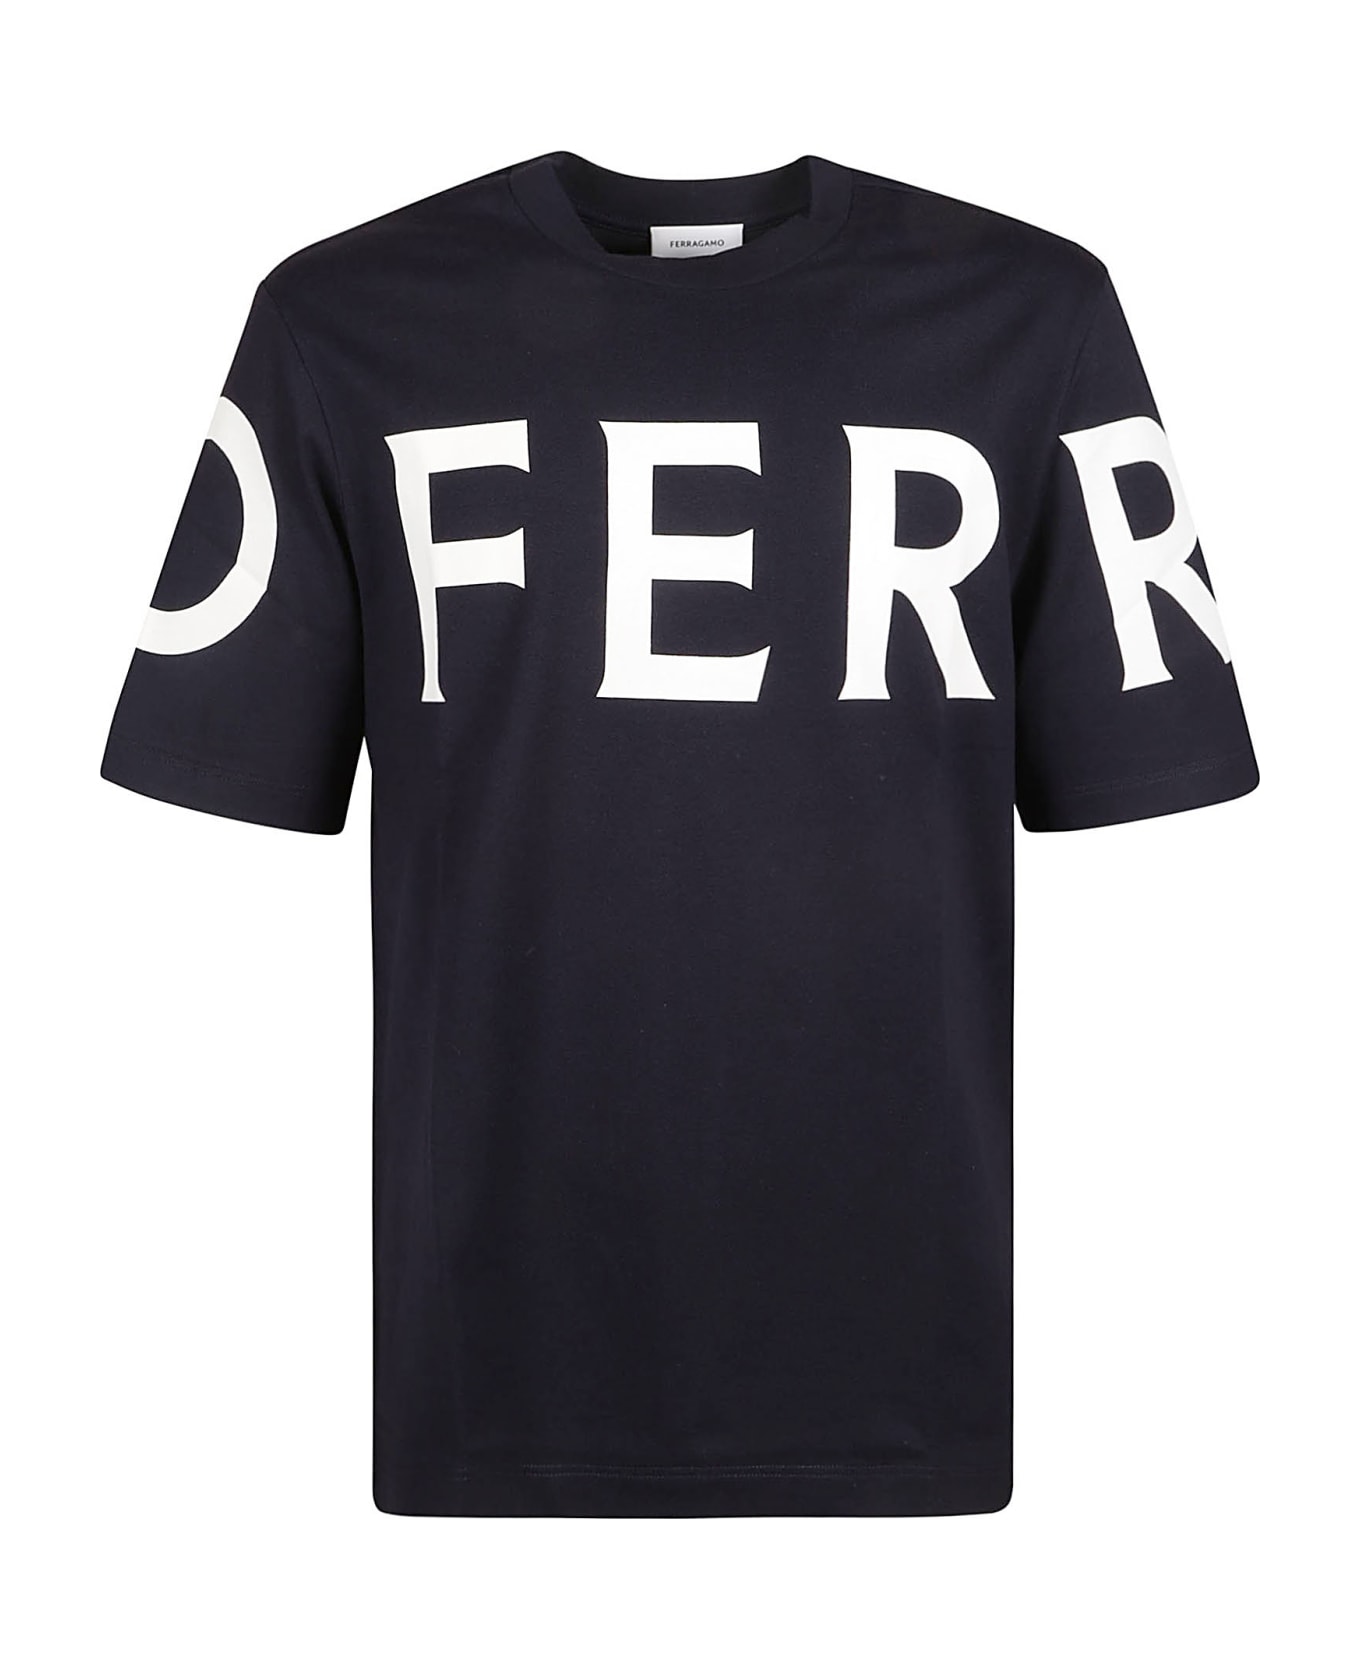 Ferragamo Logo All-over T-shirt - Blue